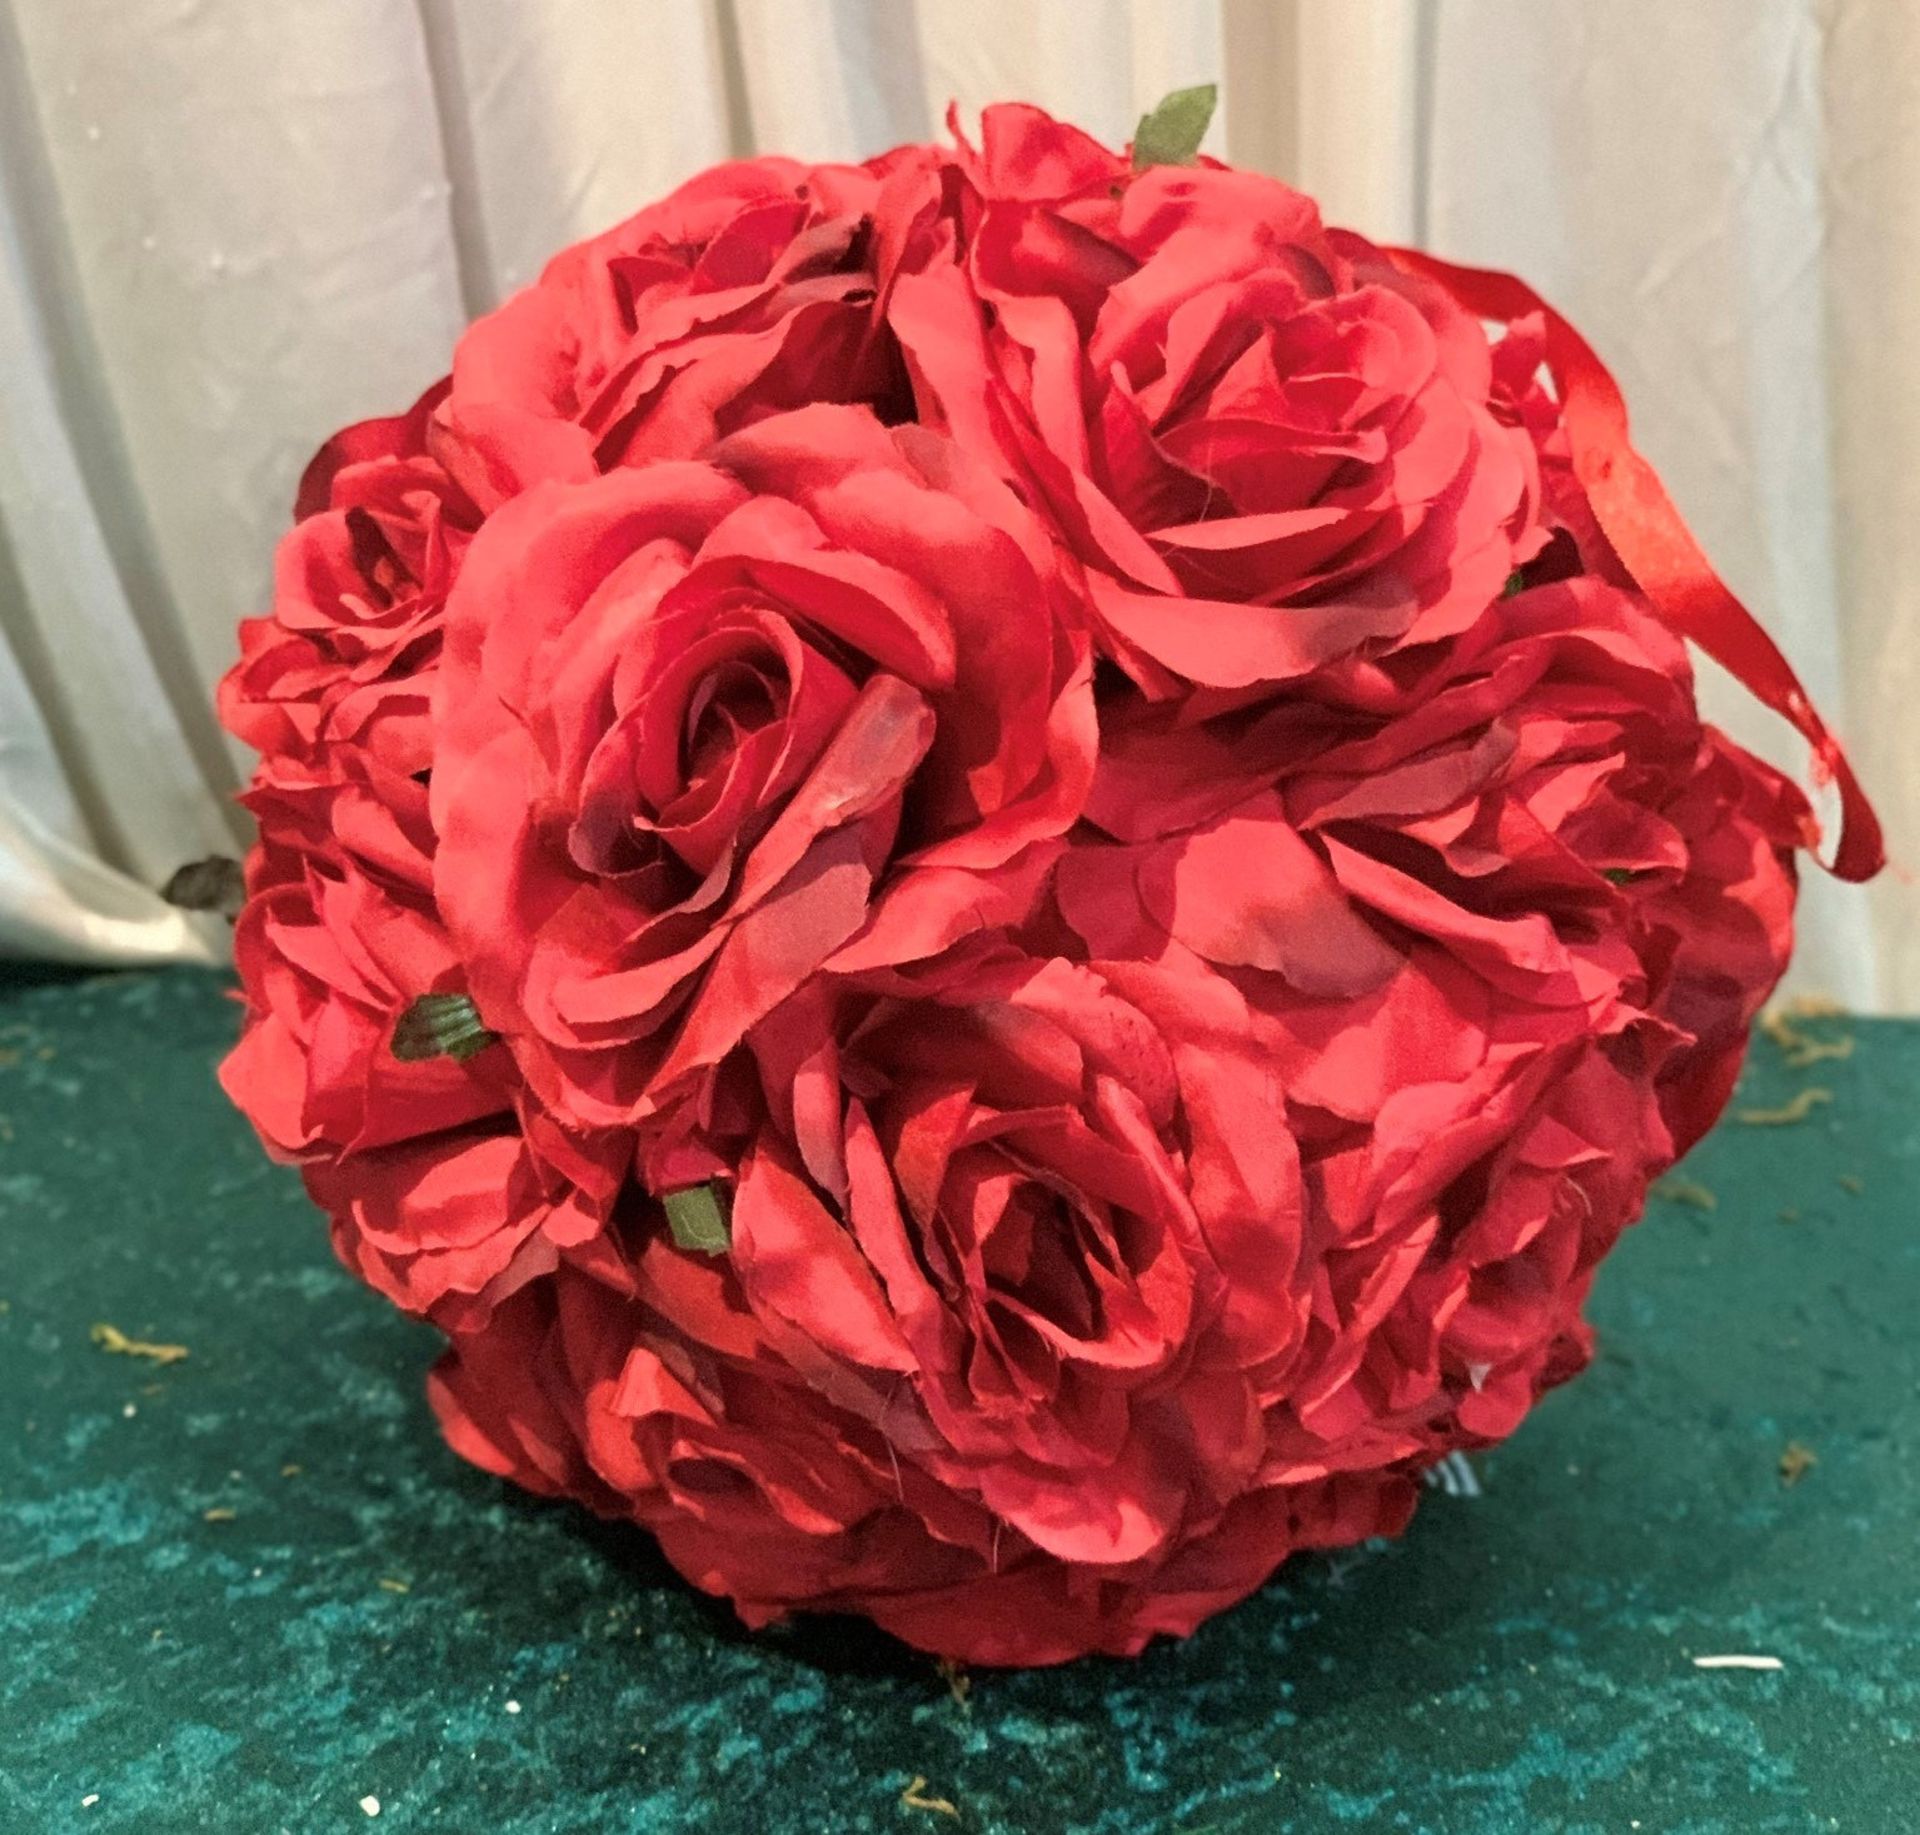 10 x Small 25cm Flowerballs - Dimensions: 25cm - Ref: Lot 107 - CL548 - Location: Near Market